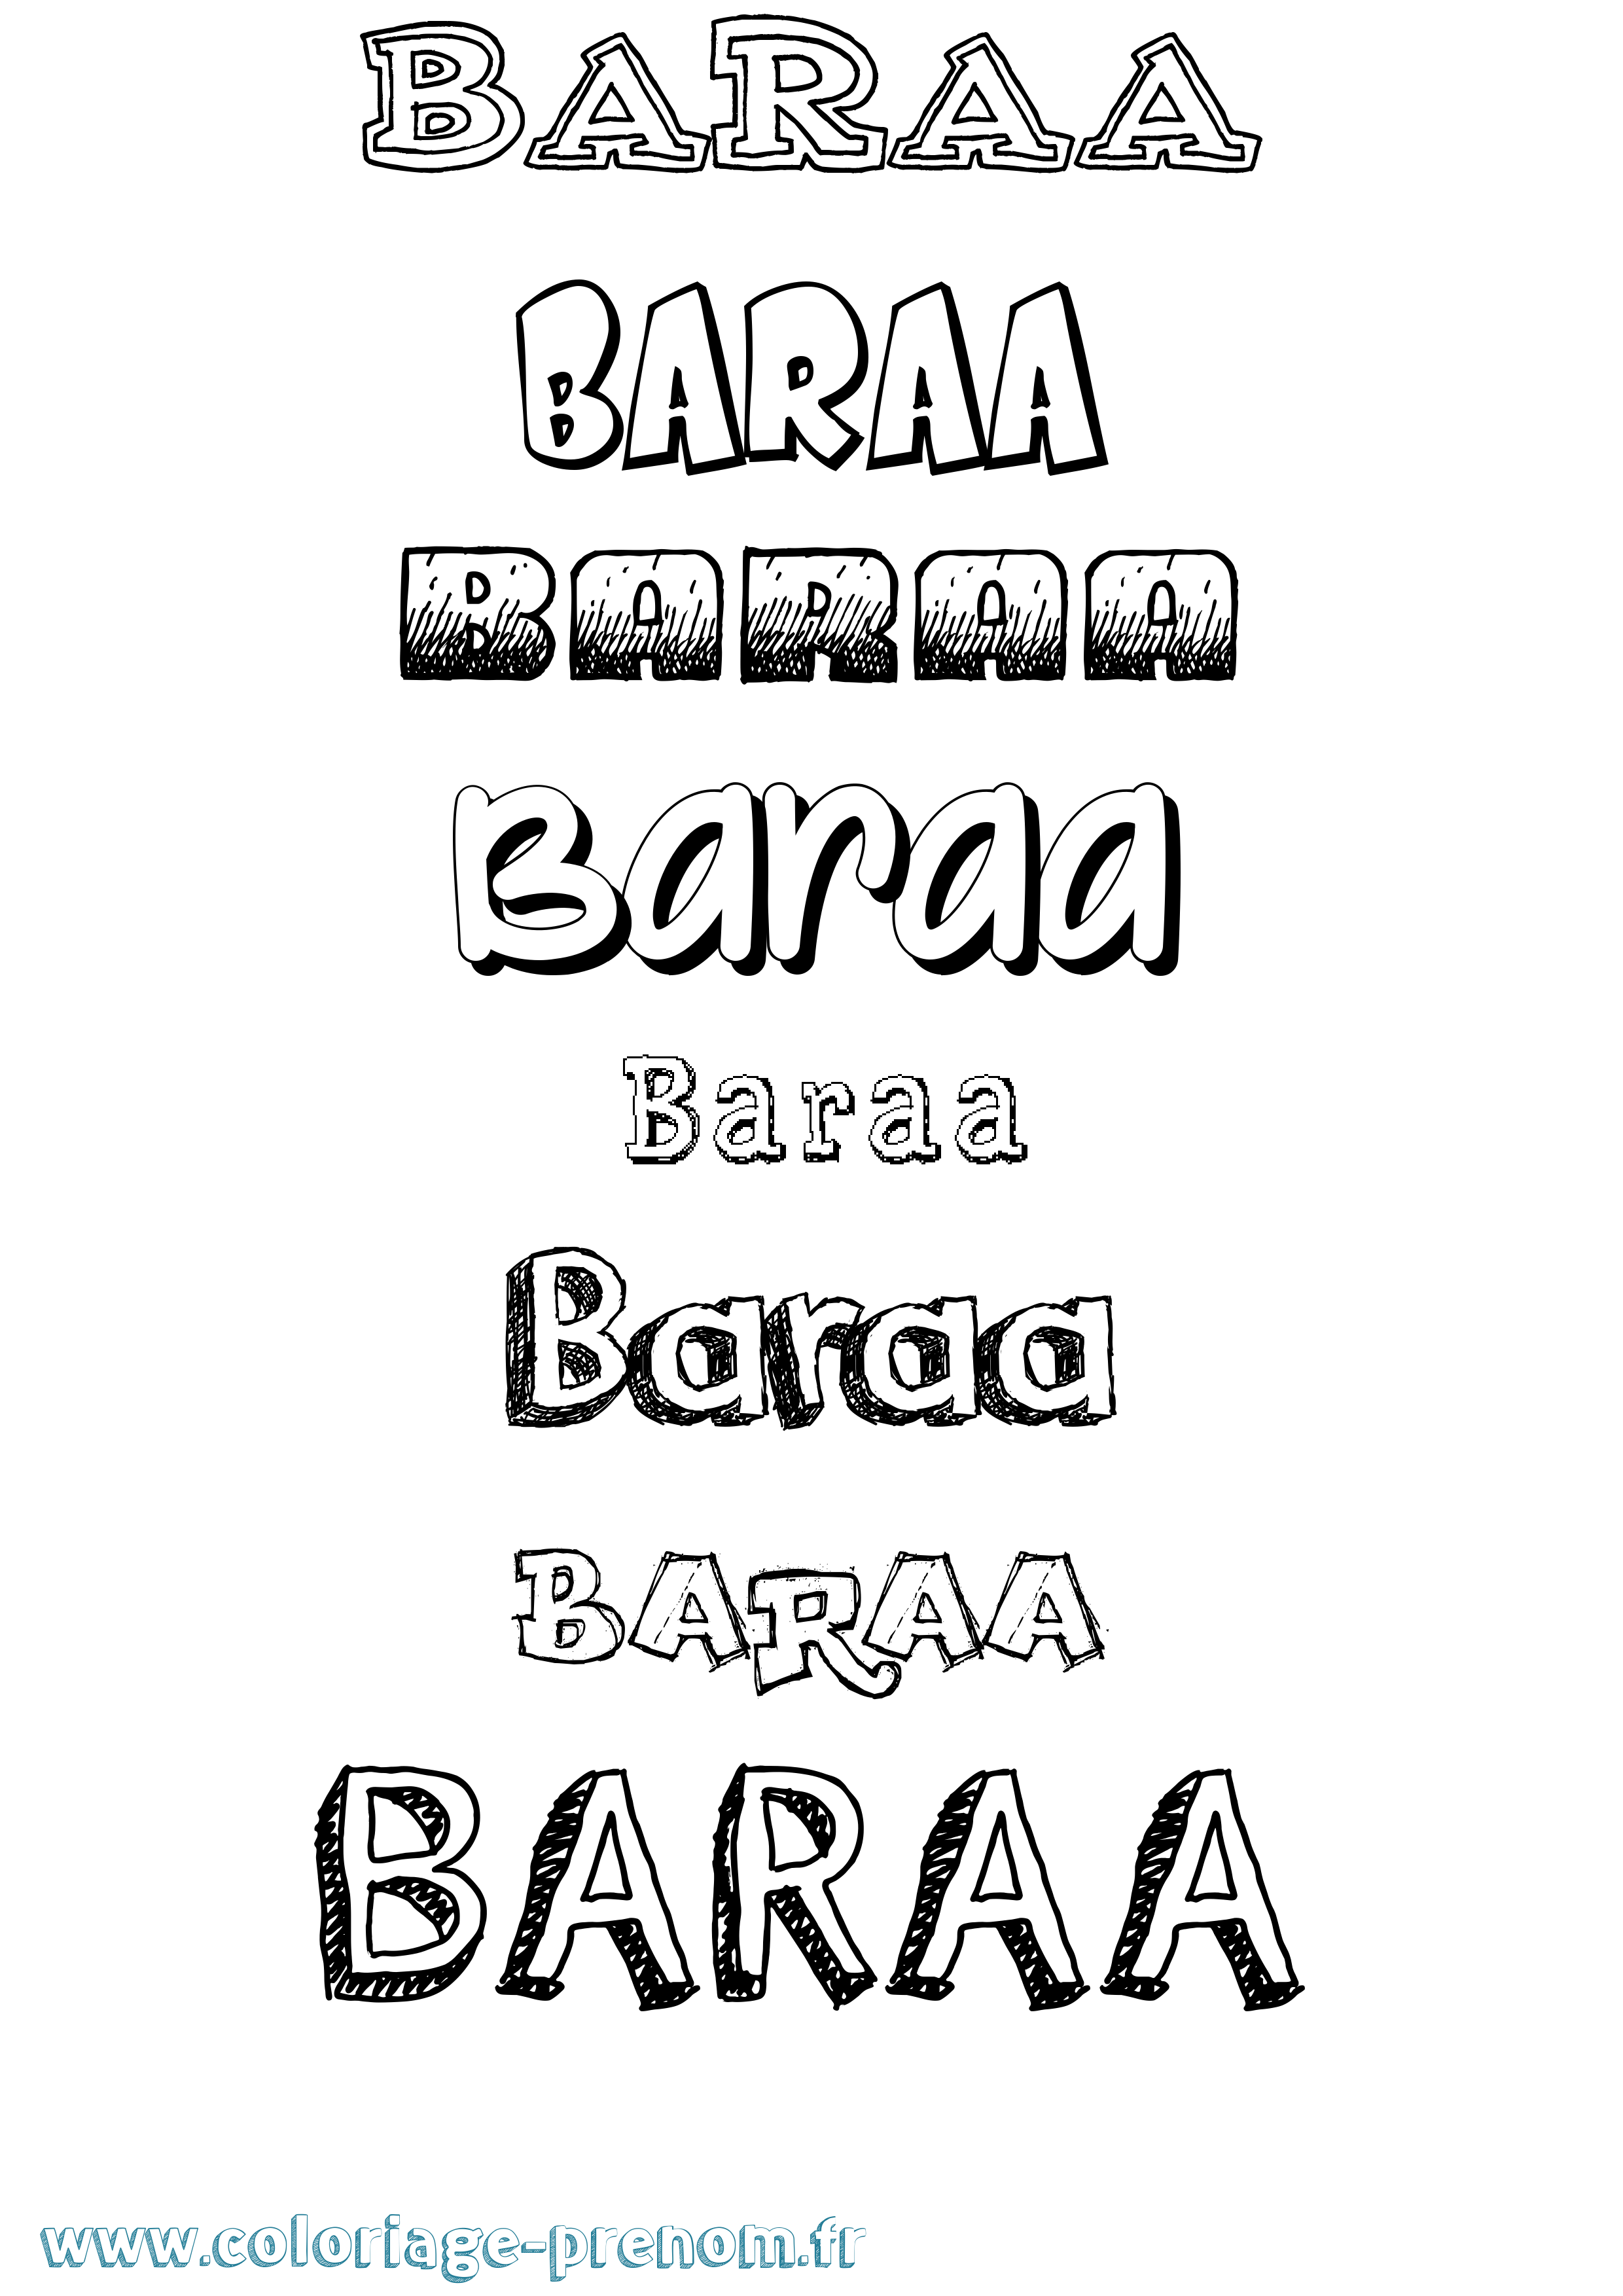 Coloriage prénom Baraa Dessiné